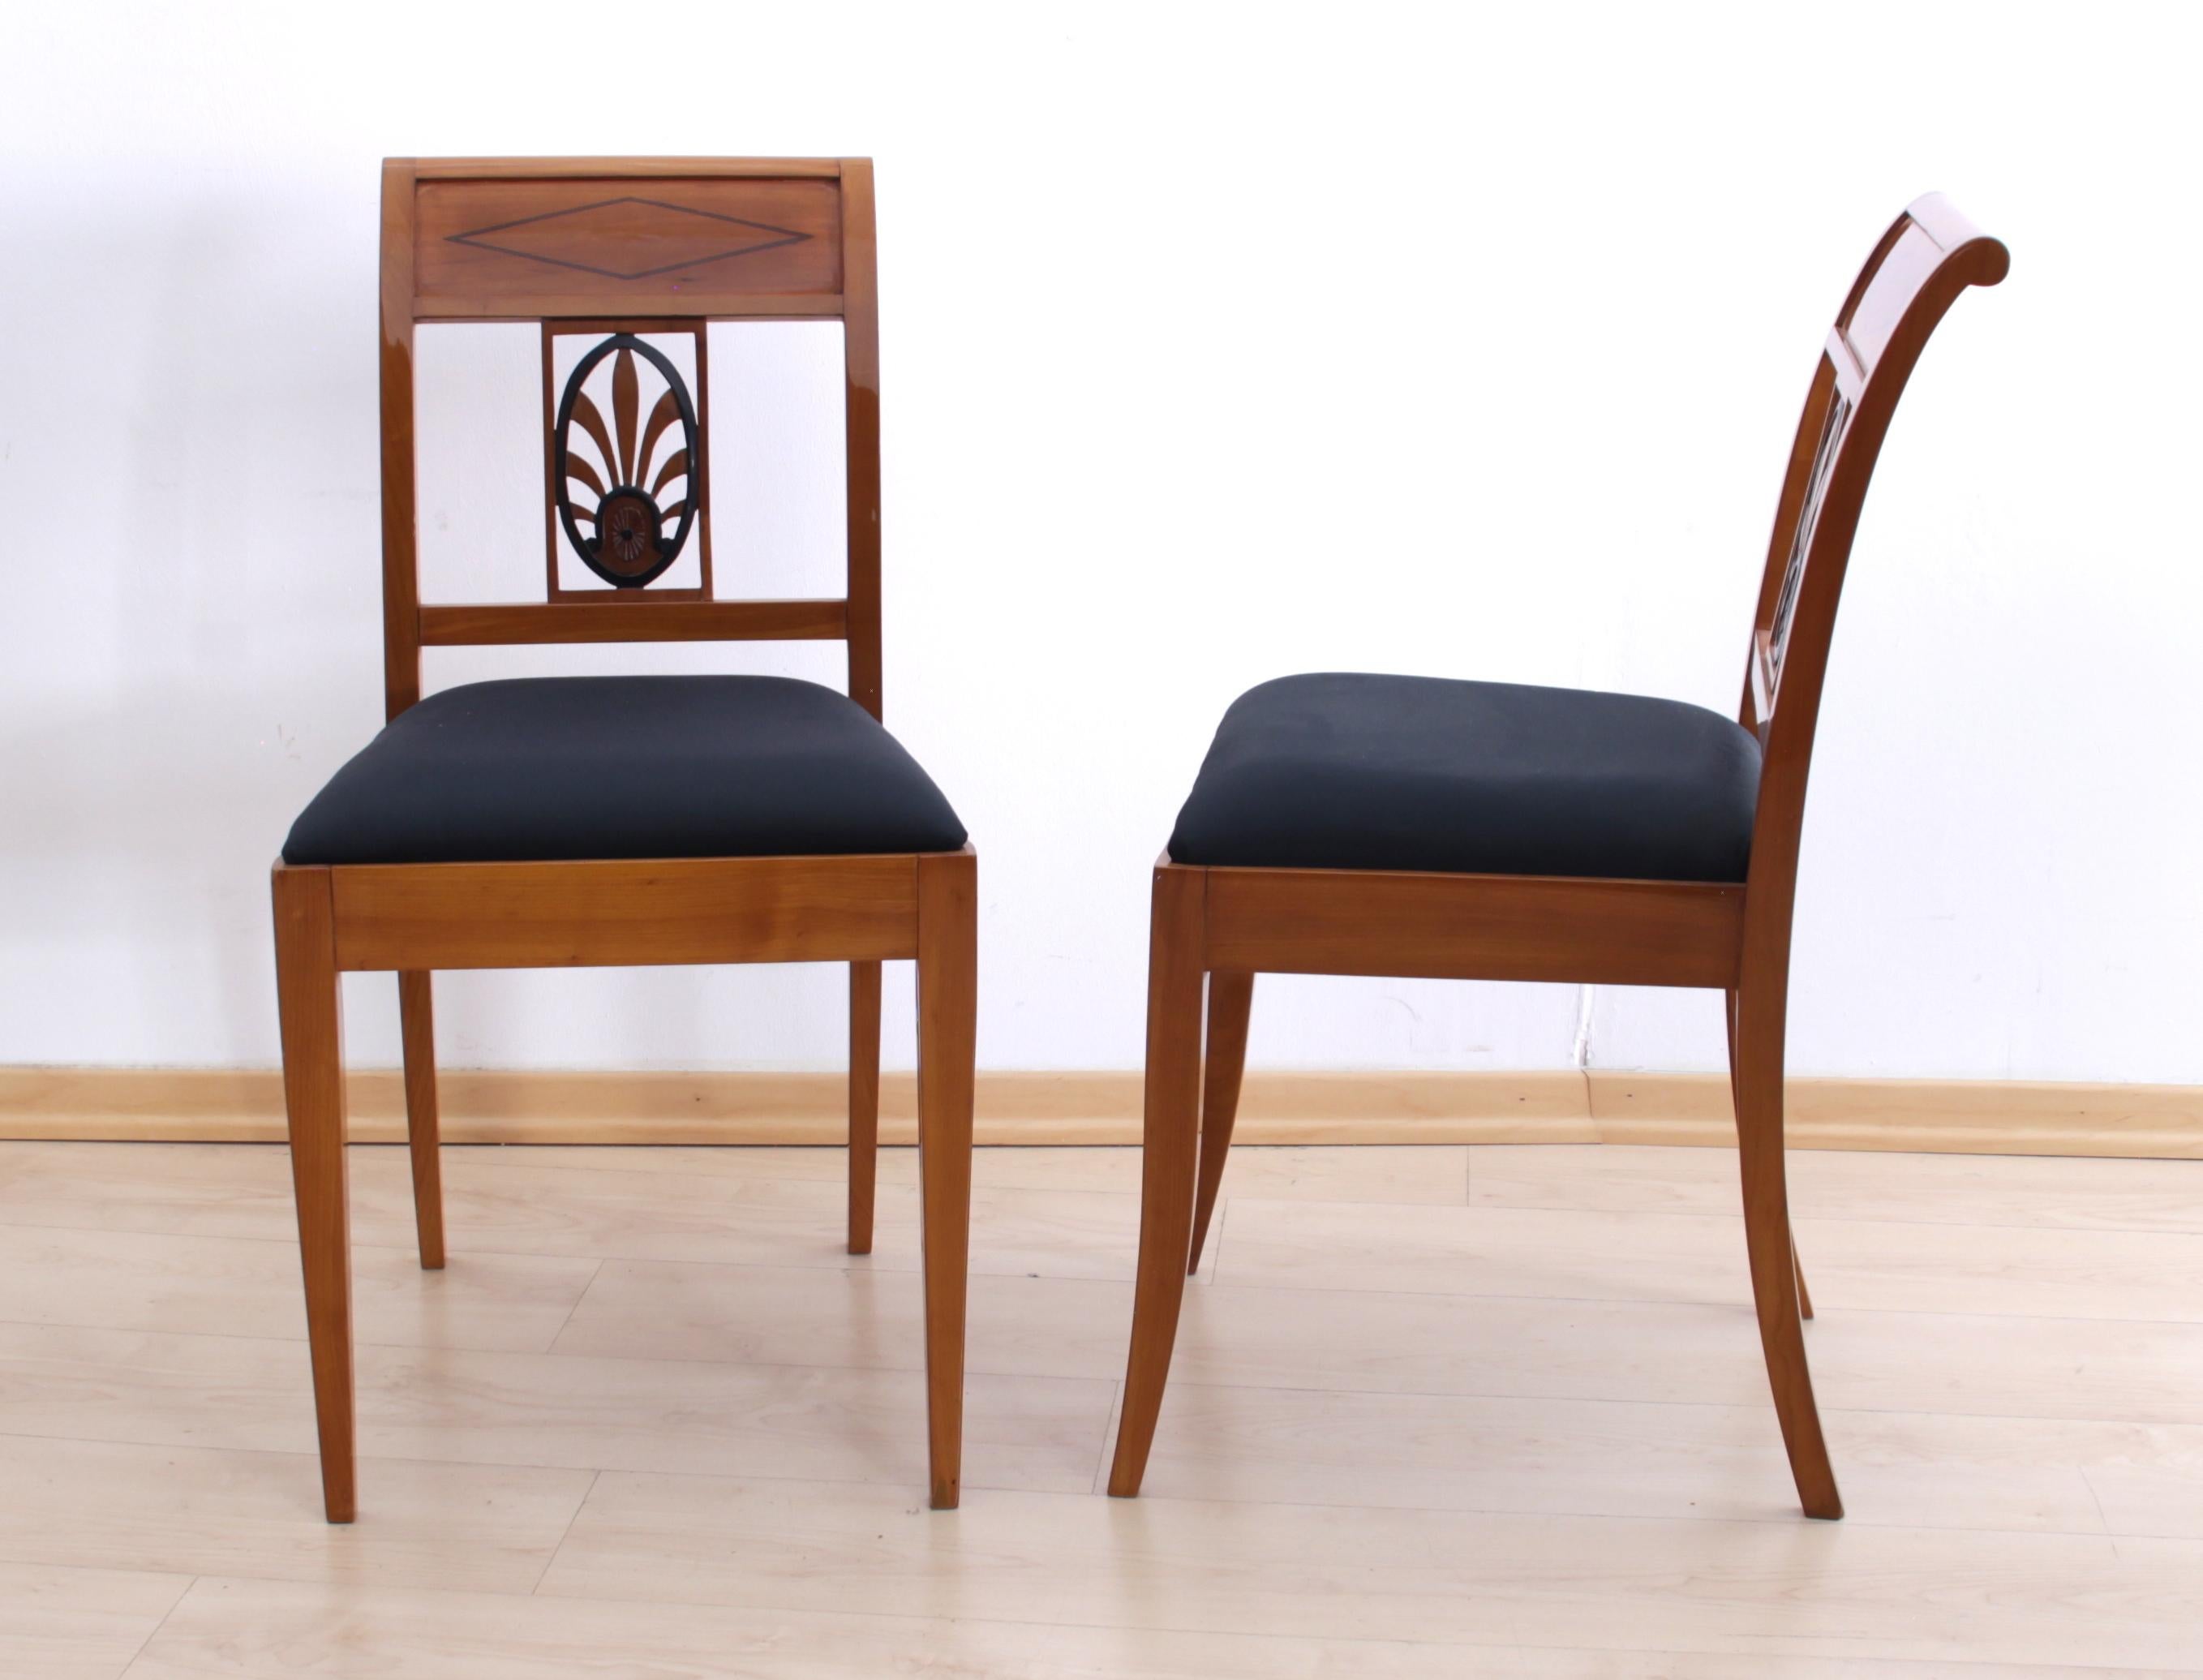 Early 19th Century Pair of Biedermeier Chairs/Ebony, Cherry, Southwest Germany, circa 1820